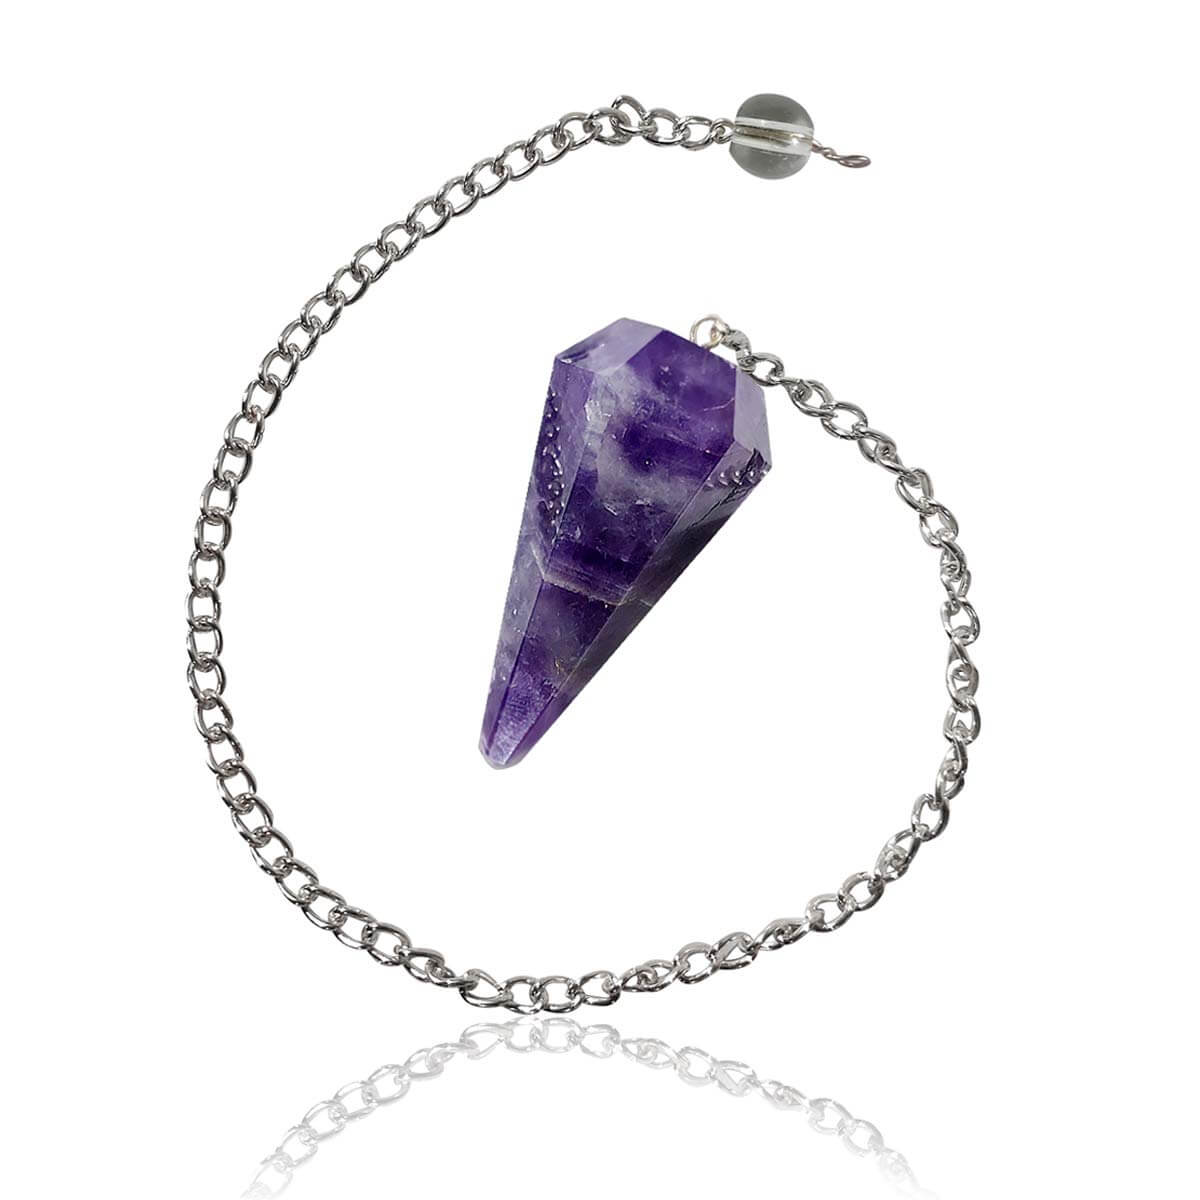 Natural Amethyst Dowser Pendulum Dowsing for Healing  (Color : Purple)